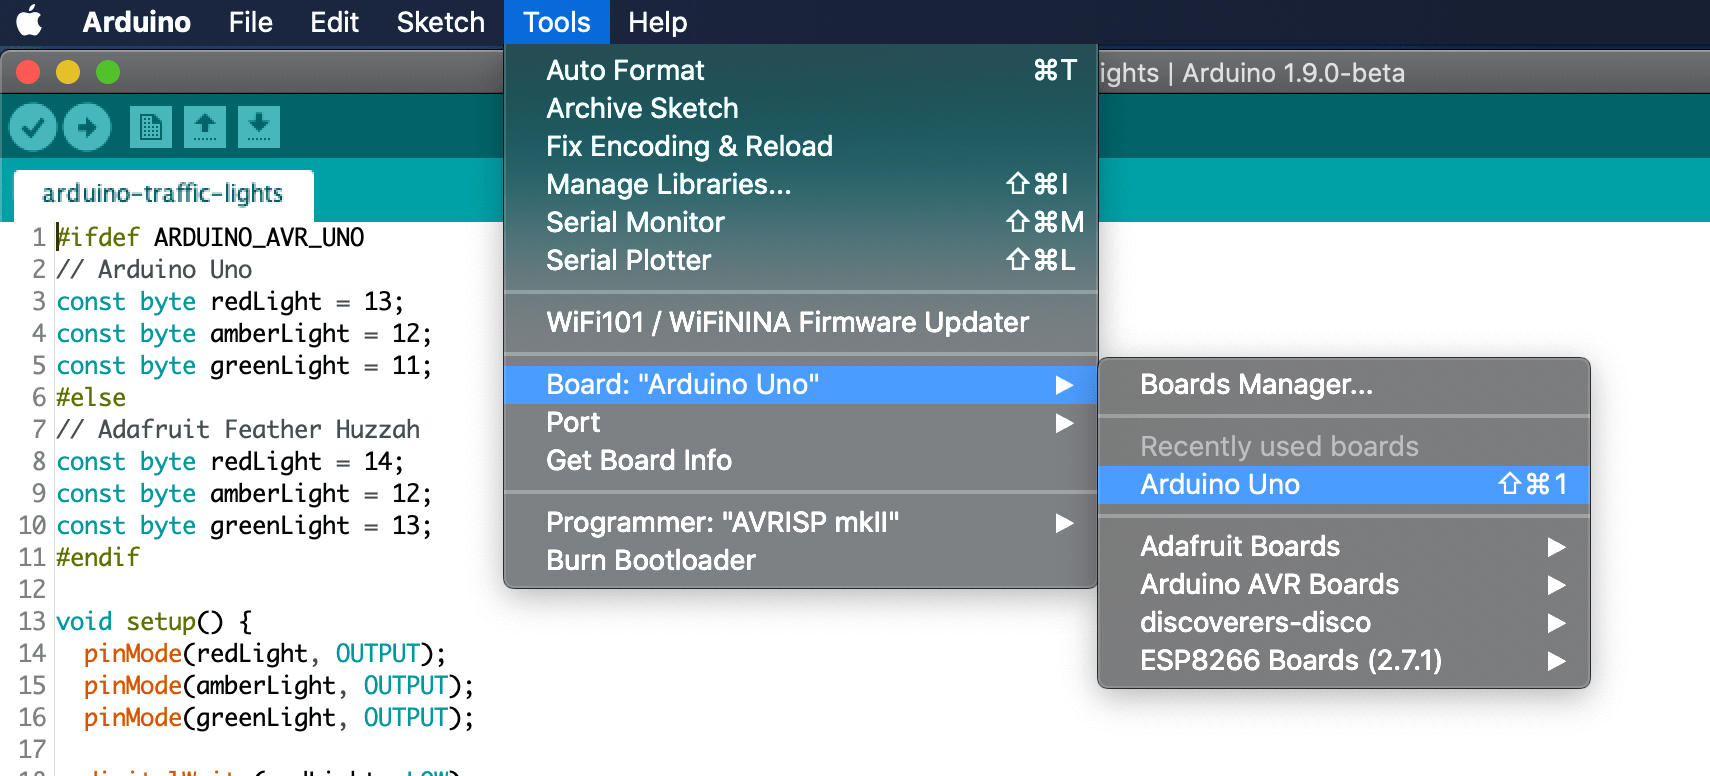 Selecting the Arduino Uno board